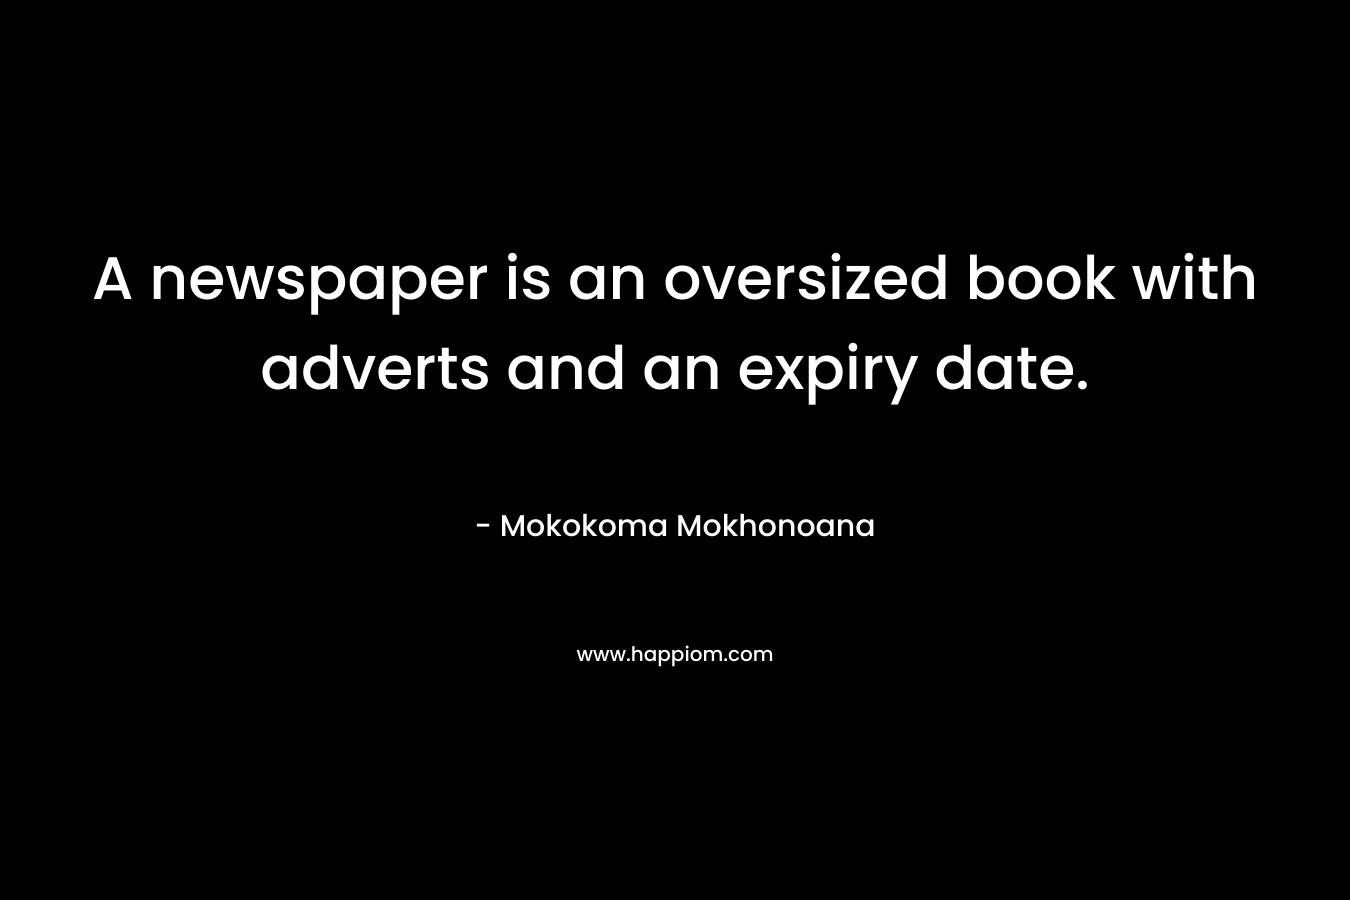 A newspaper is an oversized book with adverts and an expiry date. – Mokokoma Mokhonoana